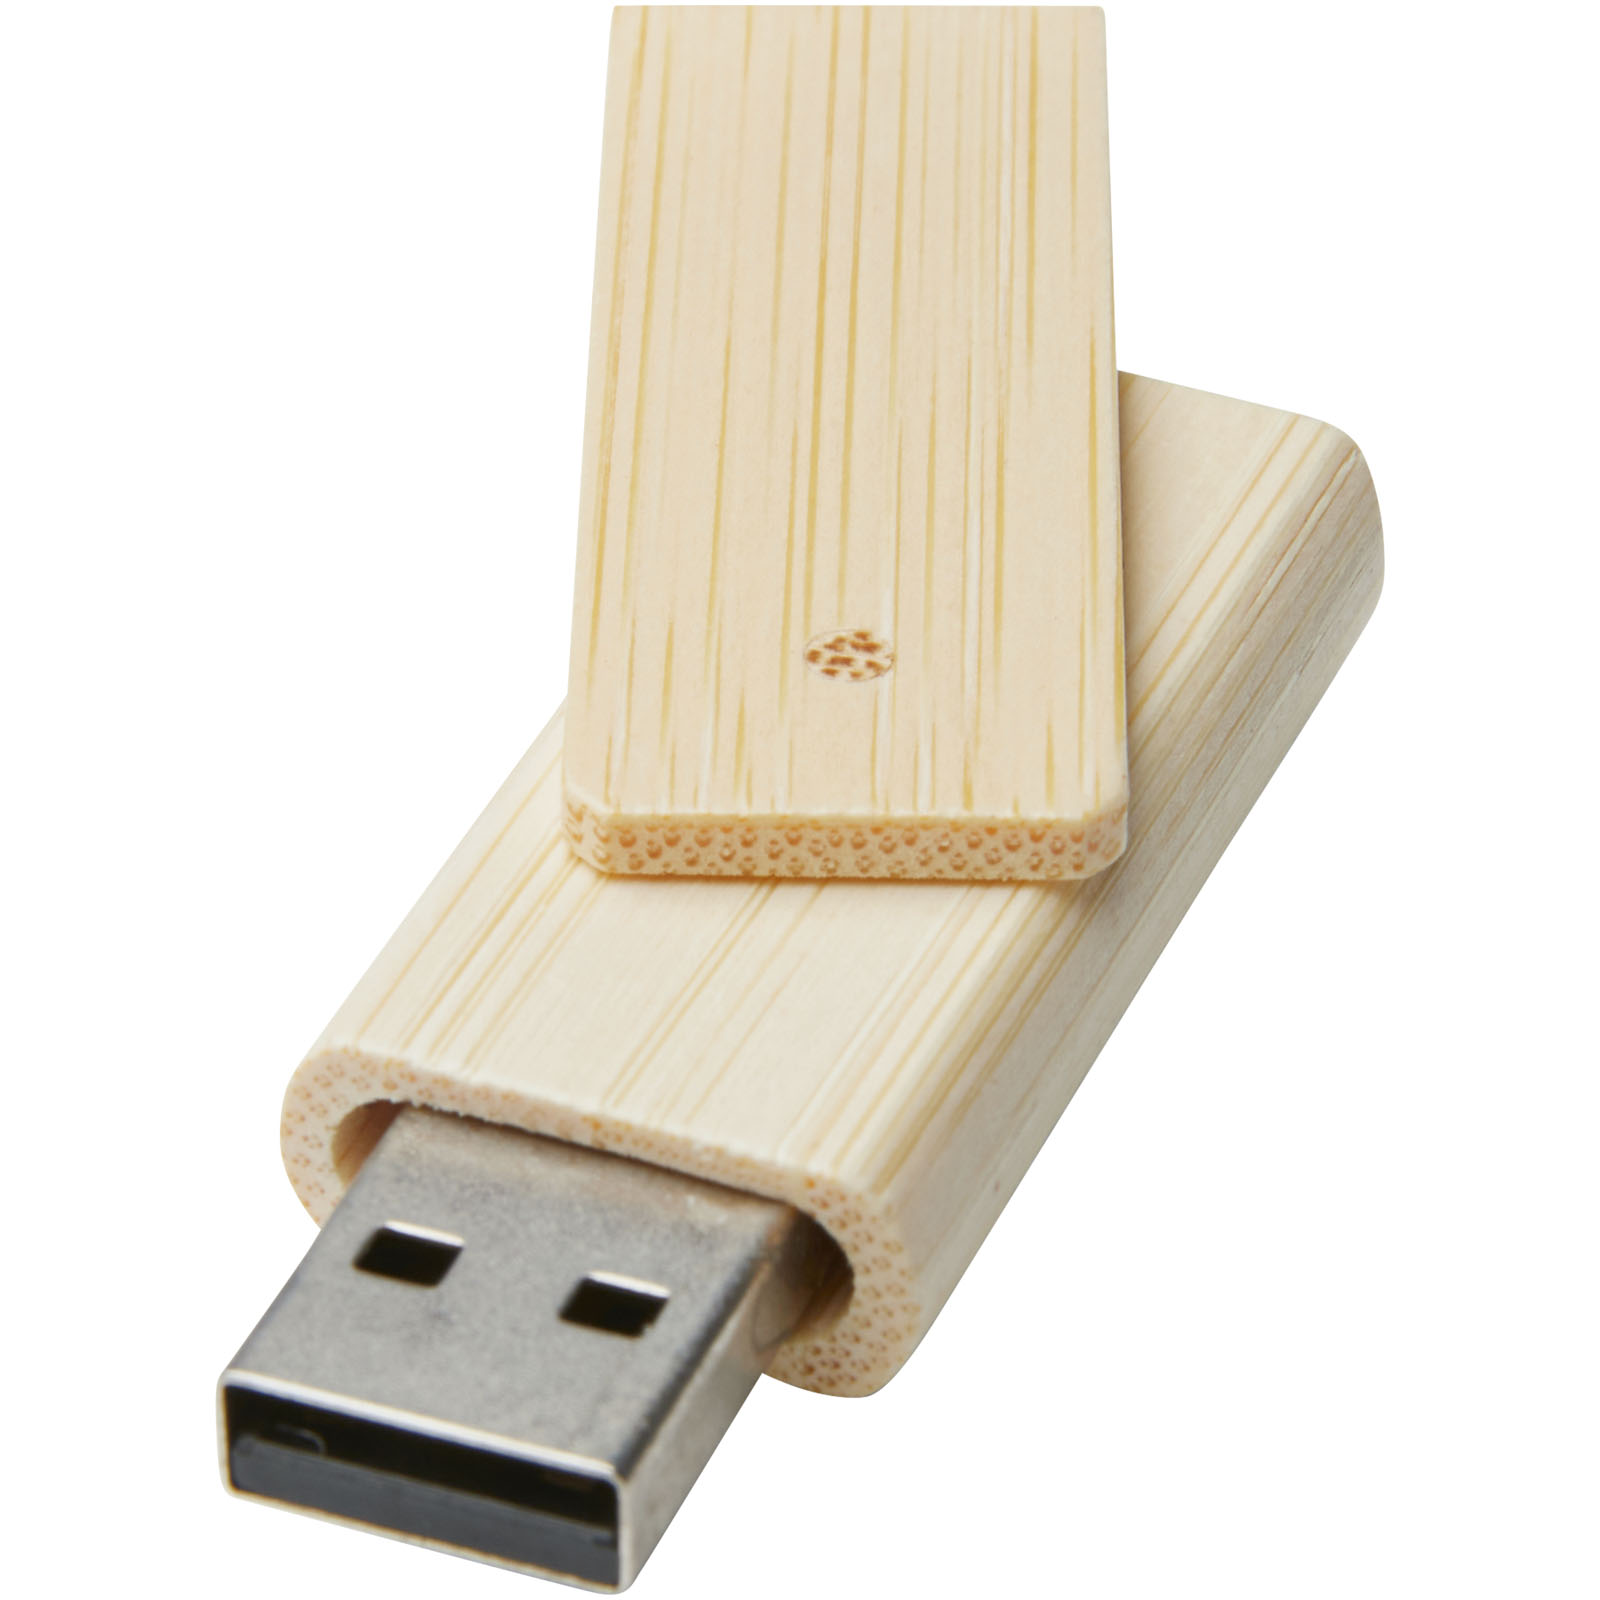 USB Flash Drives - Rotate 16GB bamboo USB flash drive